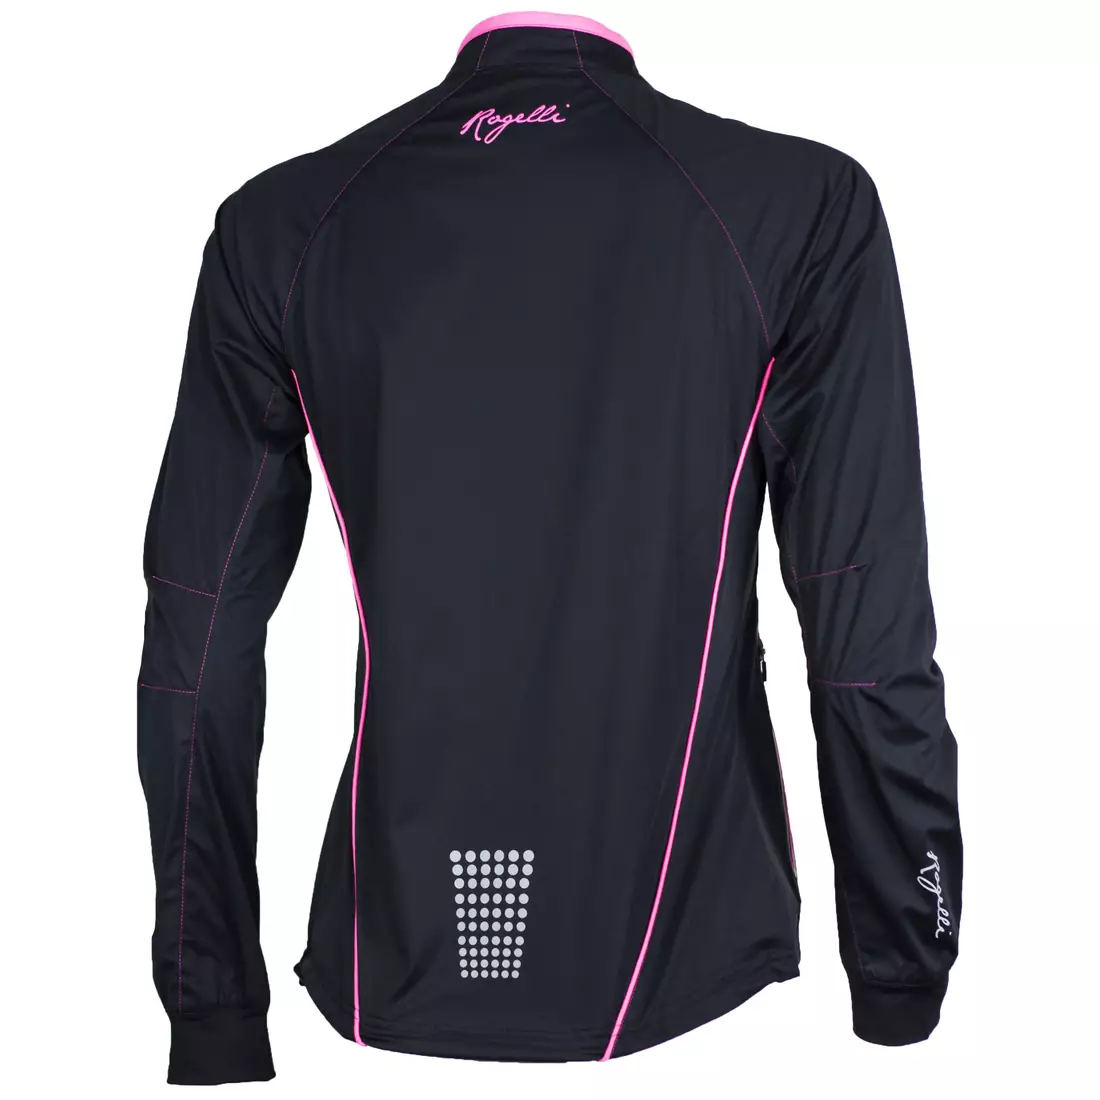 ROGELLI RUN STELLE 801.800 - women's rainproof running jacket, black and pink